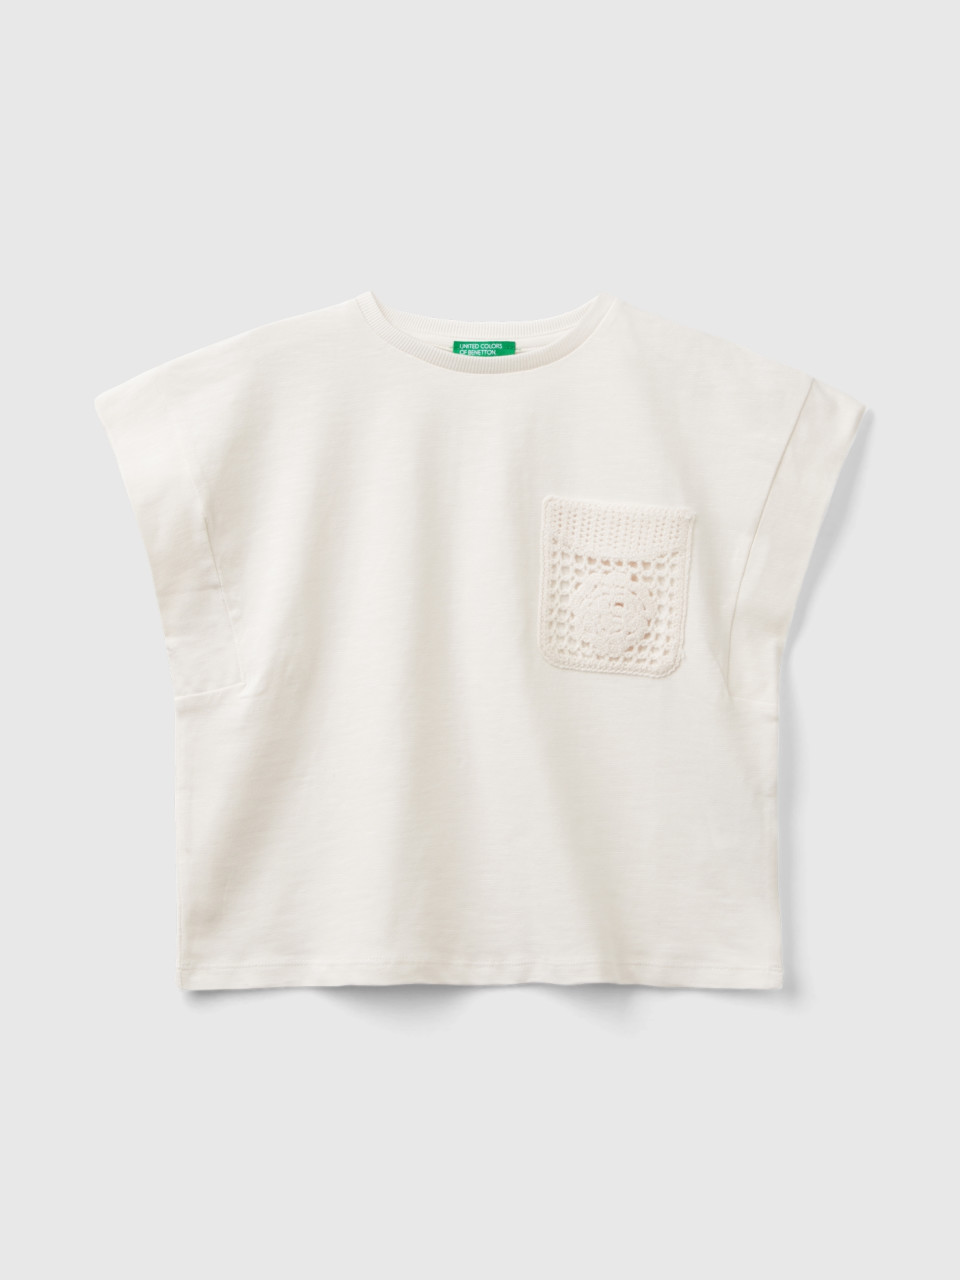 Benetton, T-shirt With Macramé Patch, Creamy White, Kids